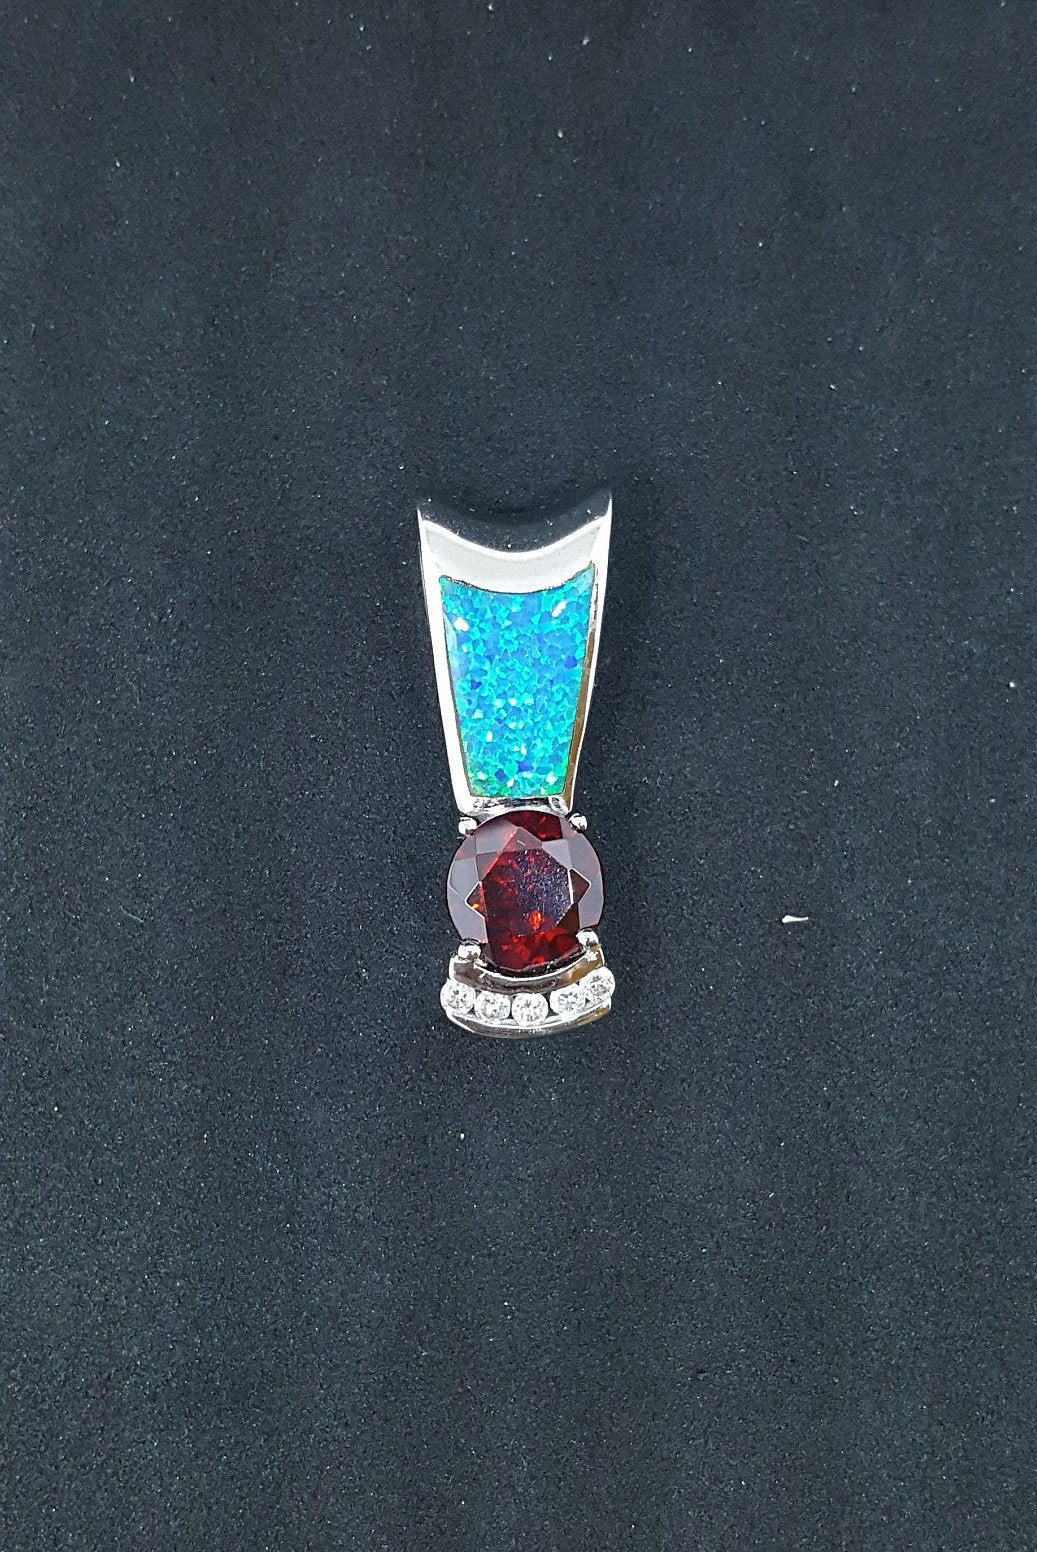 Blue Fire Opal CZ Garnet long thin oval shape sterling silver pendant necklace